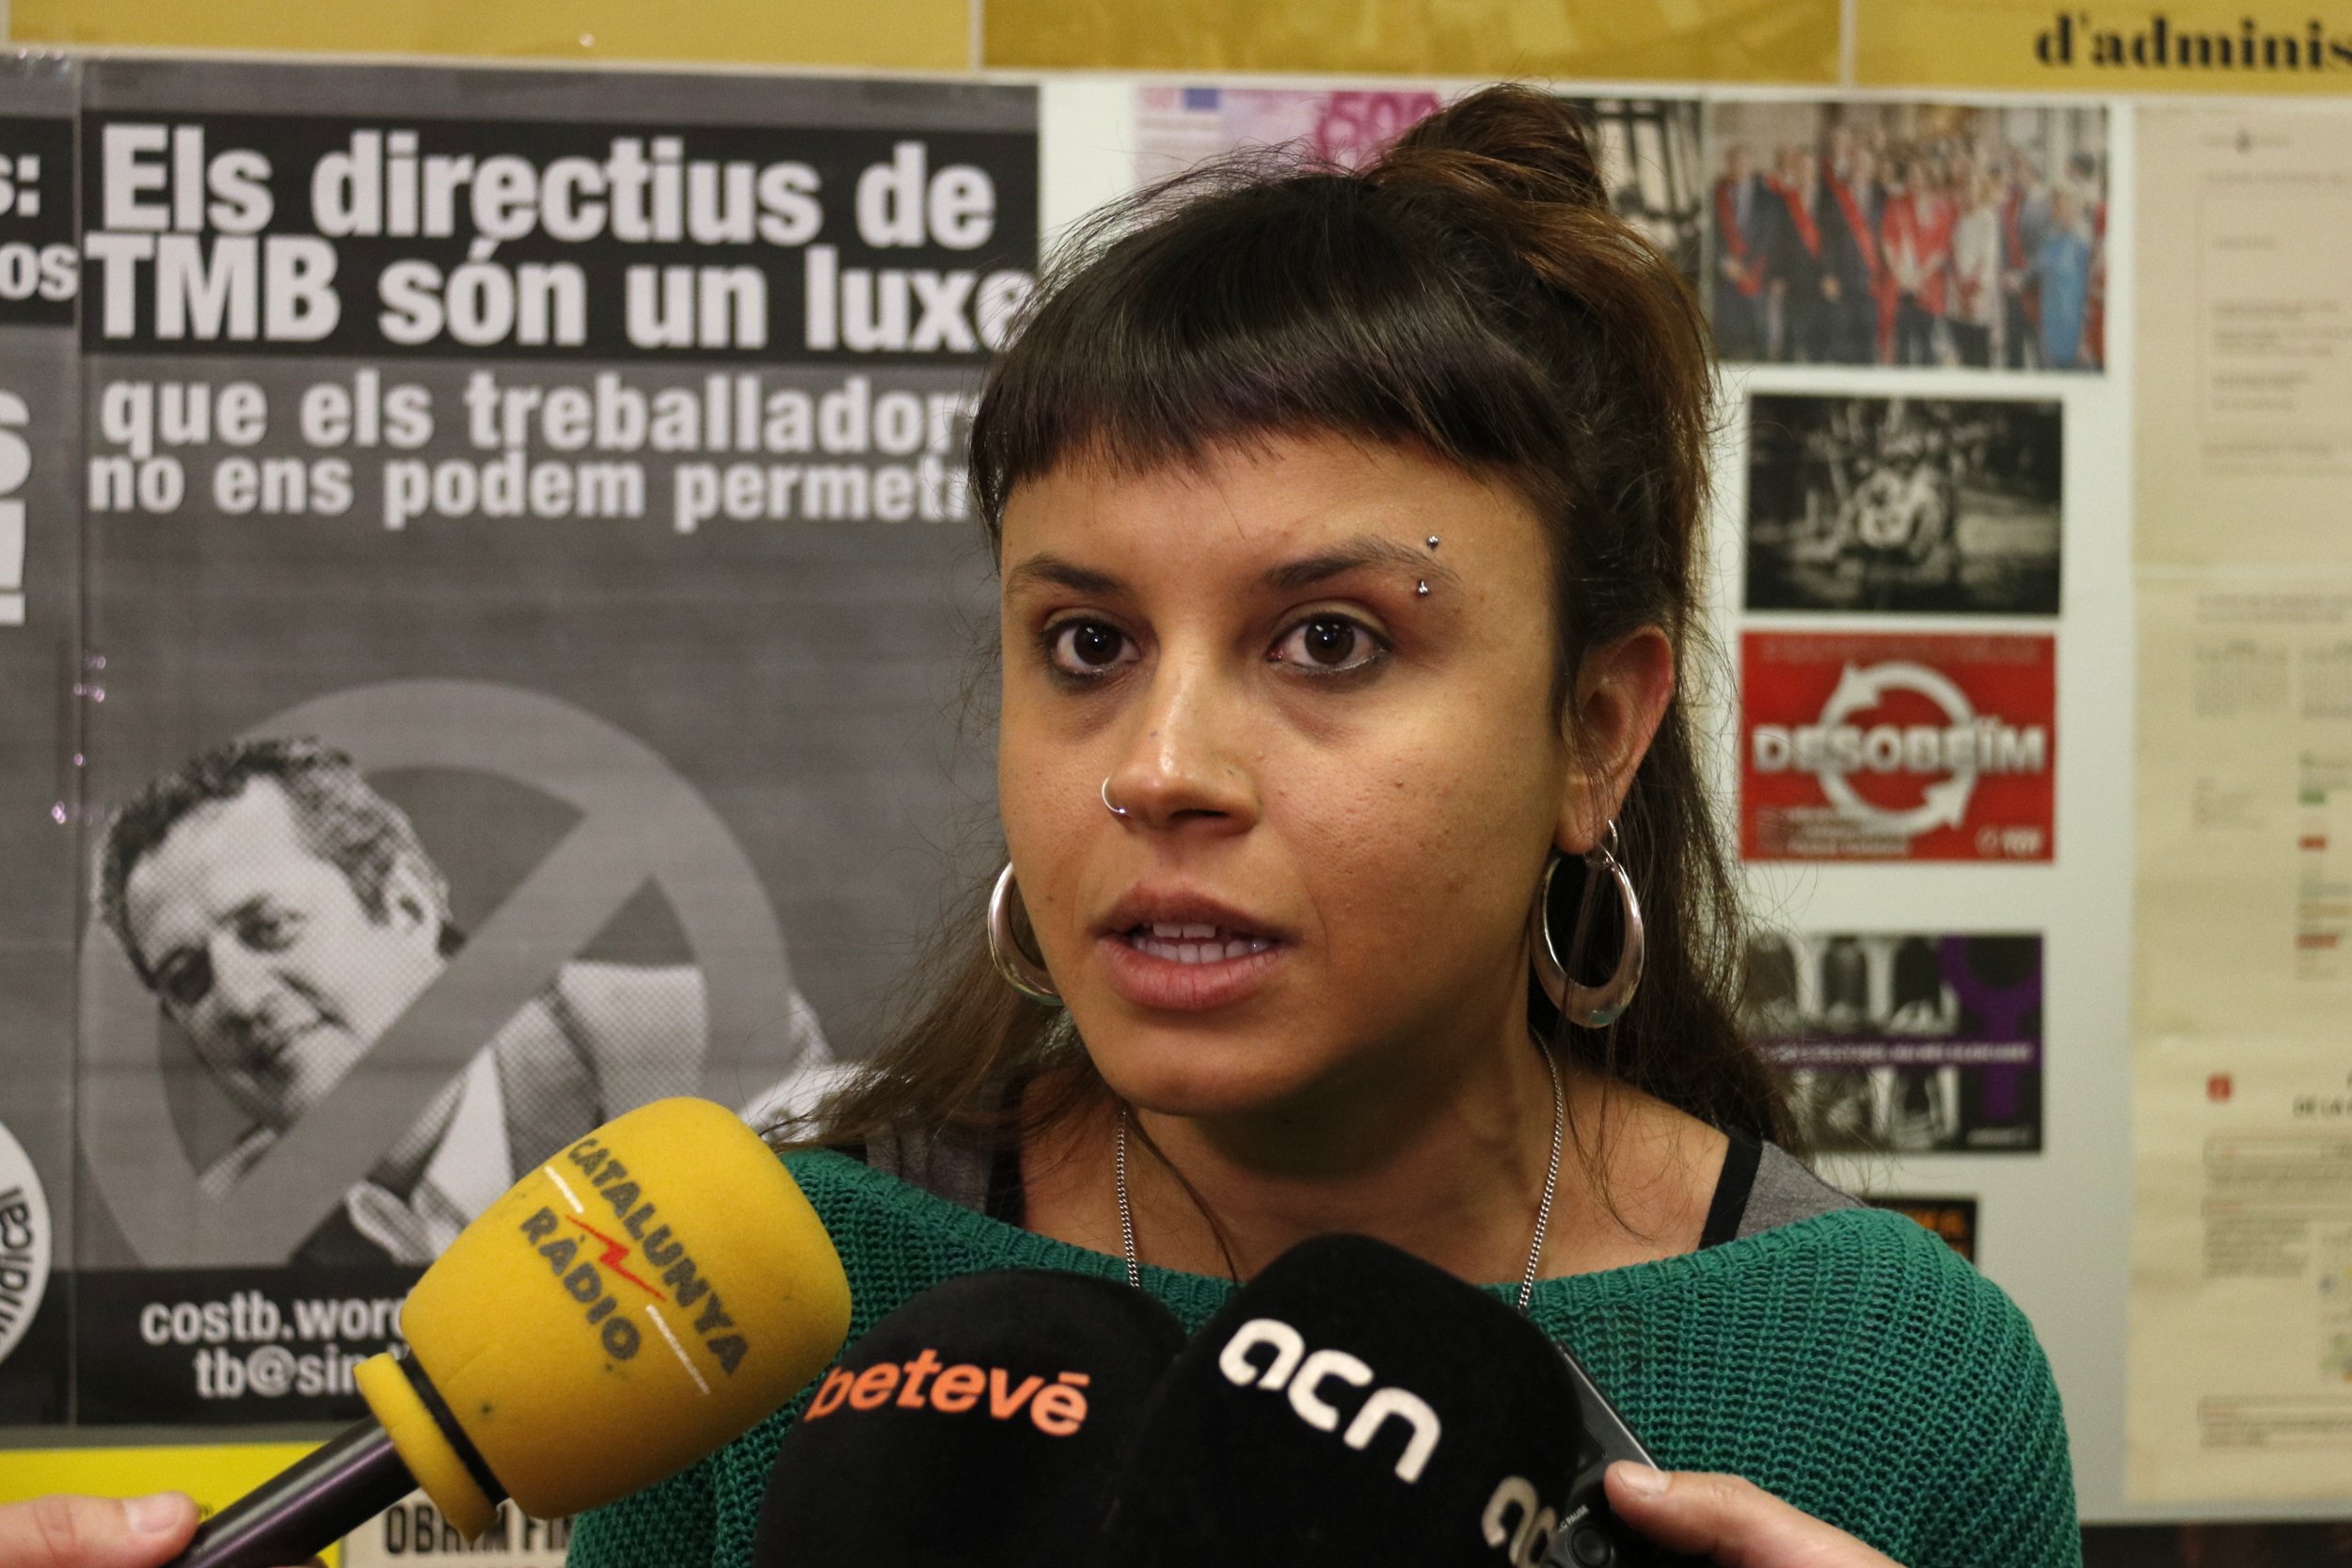 Imputada Maria Rovira (CUP) por acusar a los Mossos de "ejecutar" terroristas